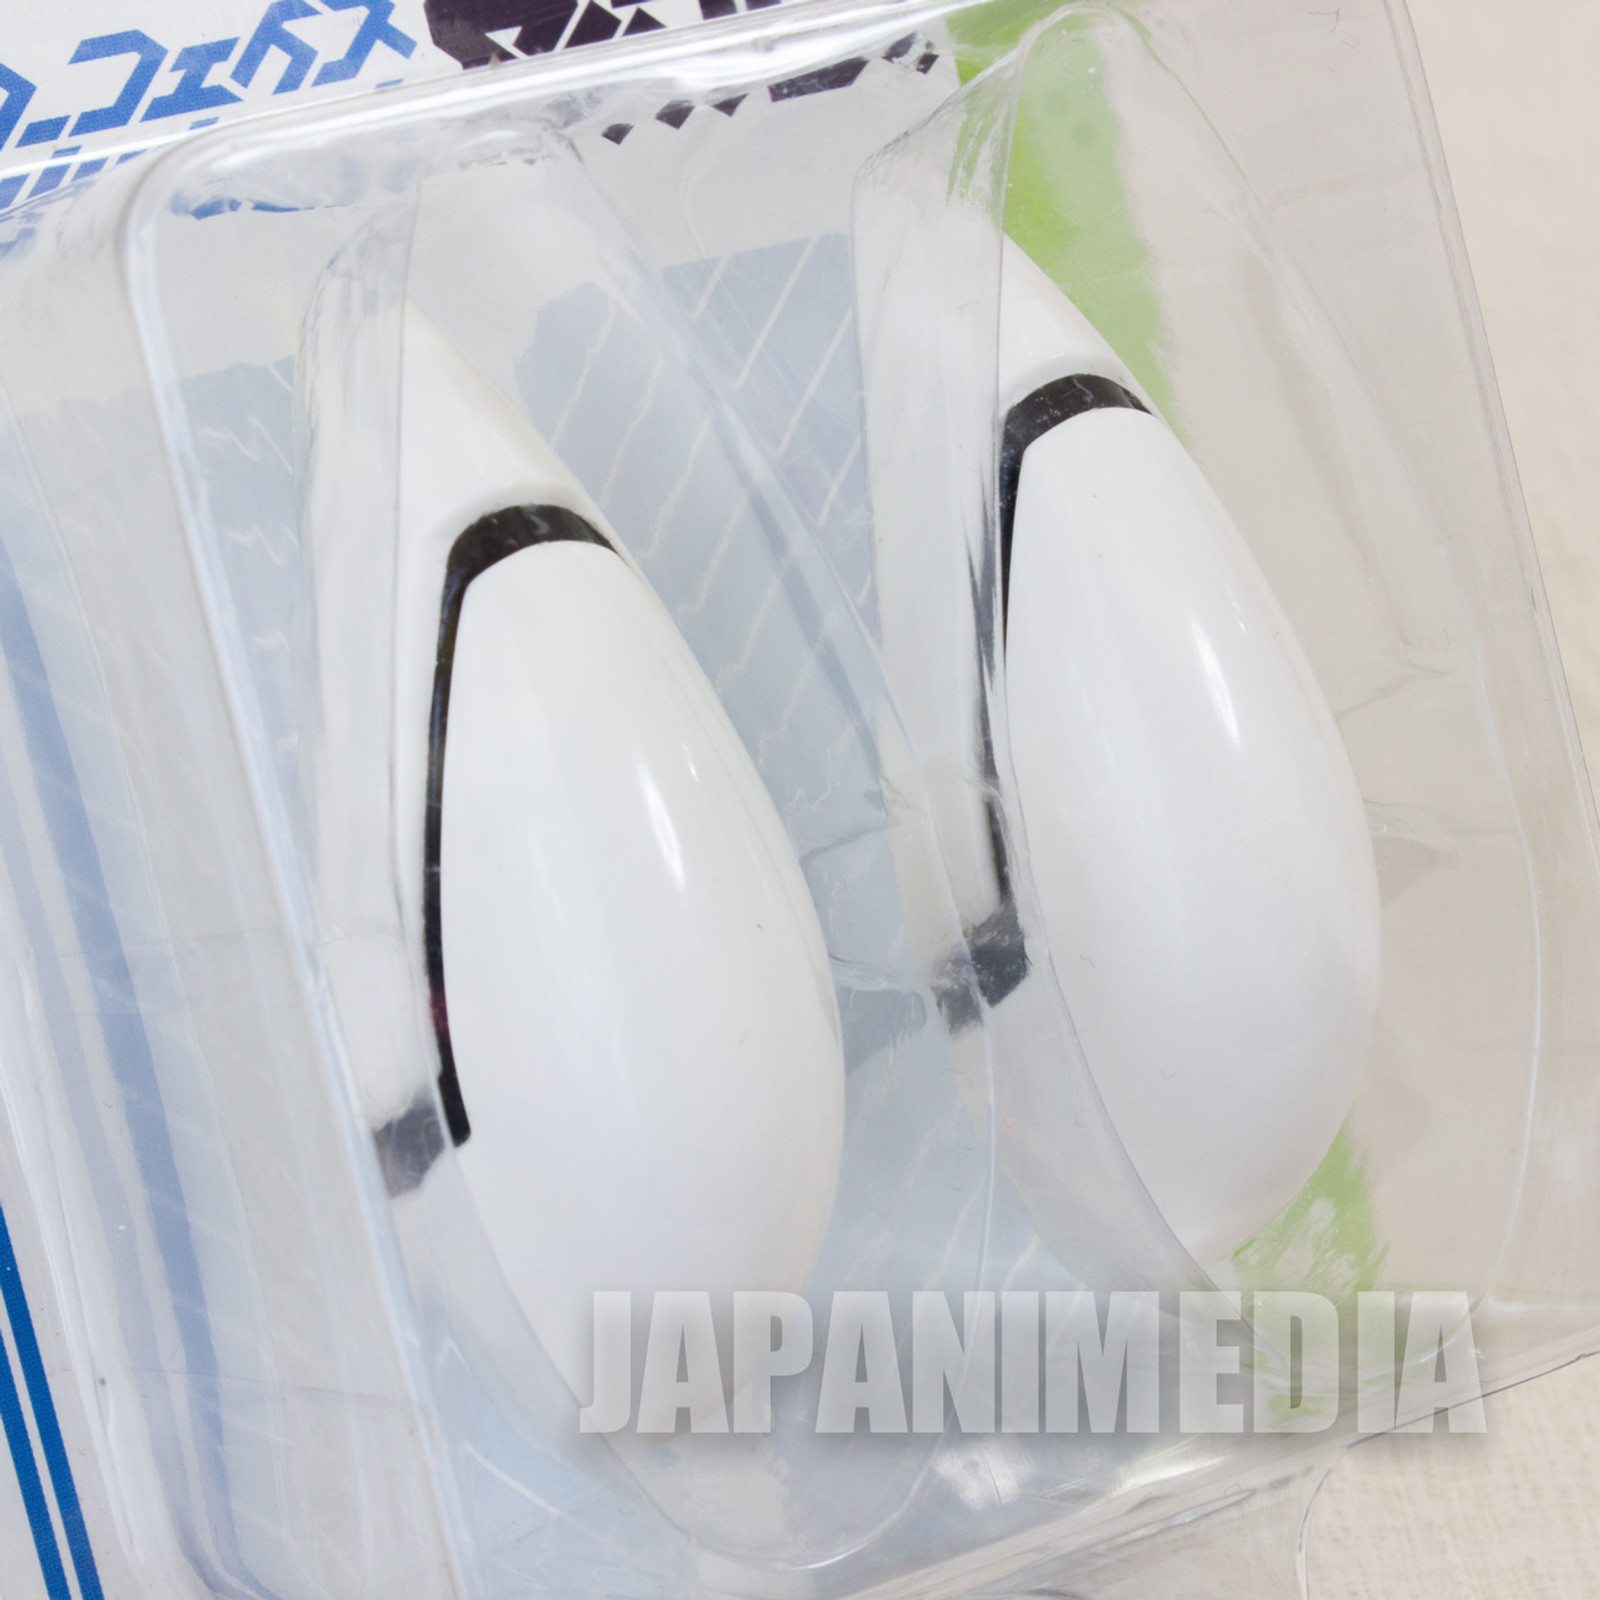 Evangelion Interface Headset Rei Ayanami Ver. Costume Play JAPAN ANIME